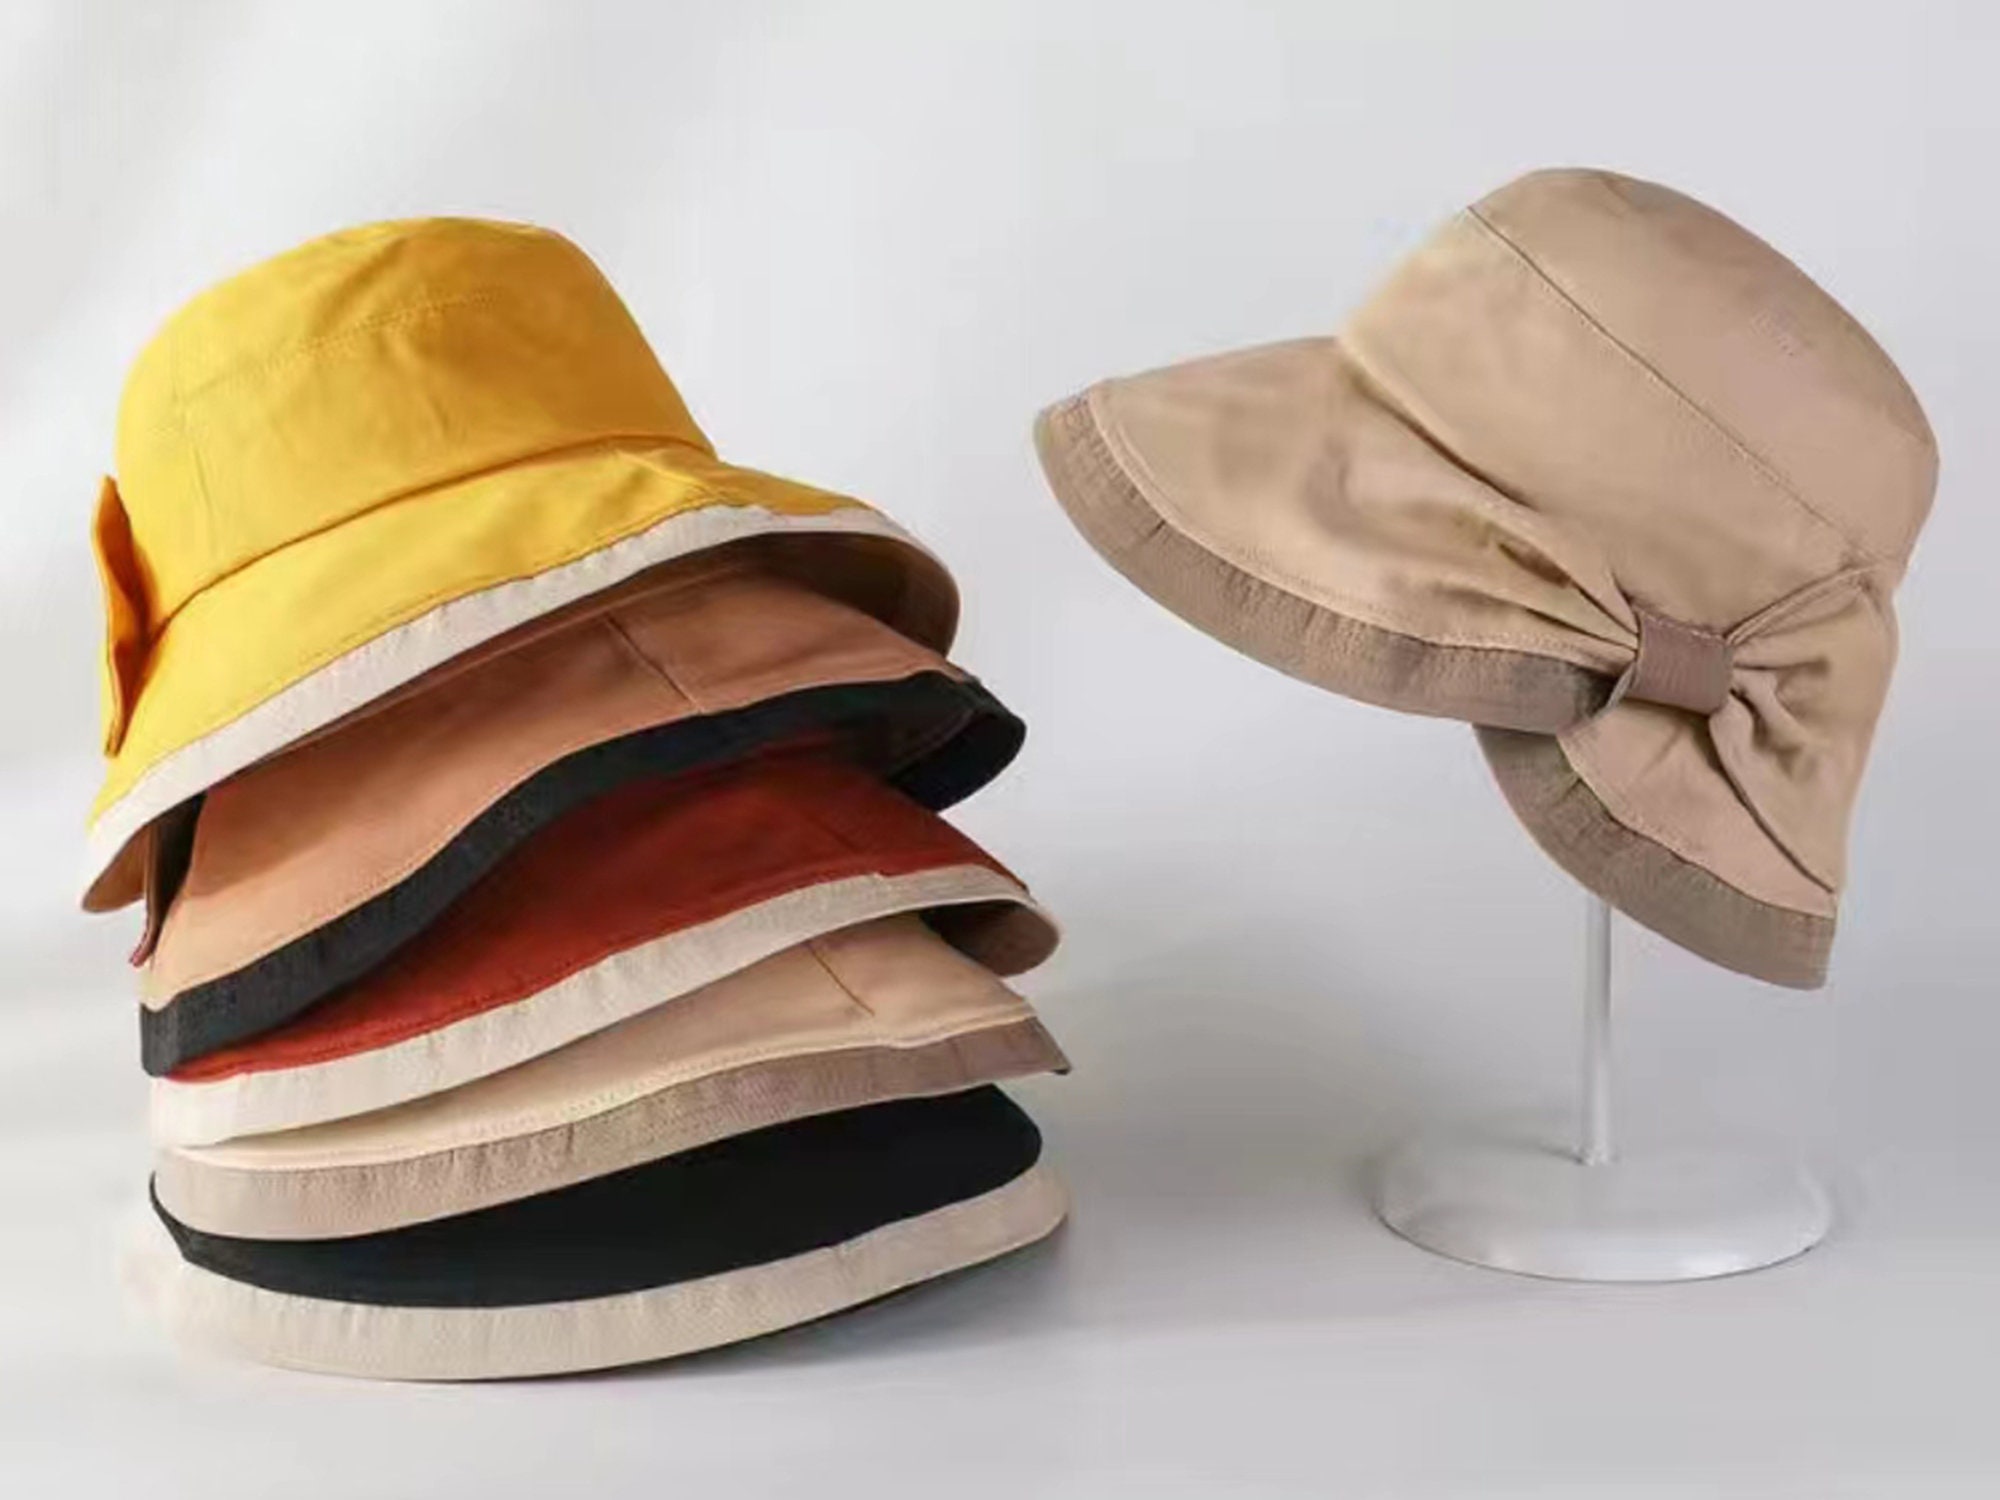 Bucket Hat Drinking Mushroom Print Fishermans Hat Mens Fashion Trend Basin  Hat